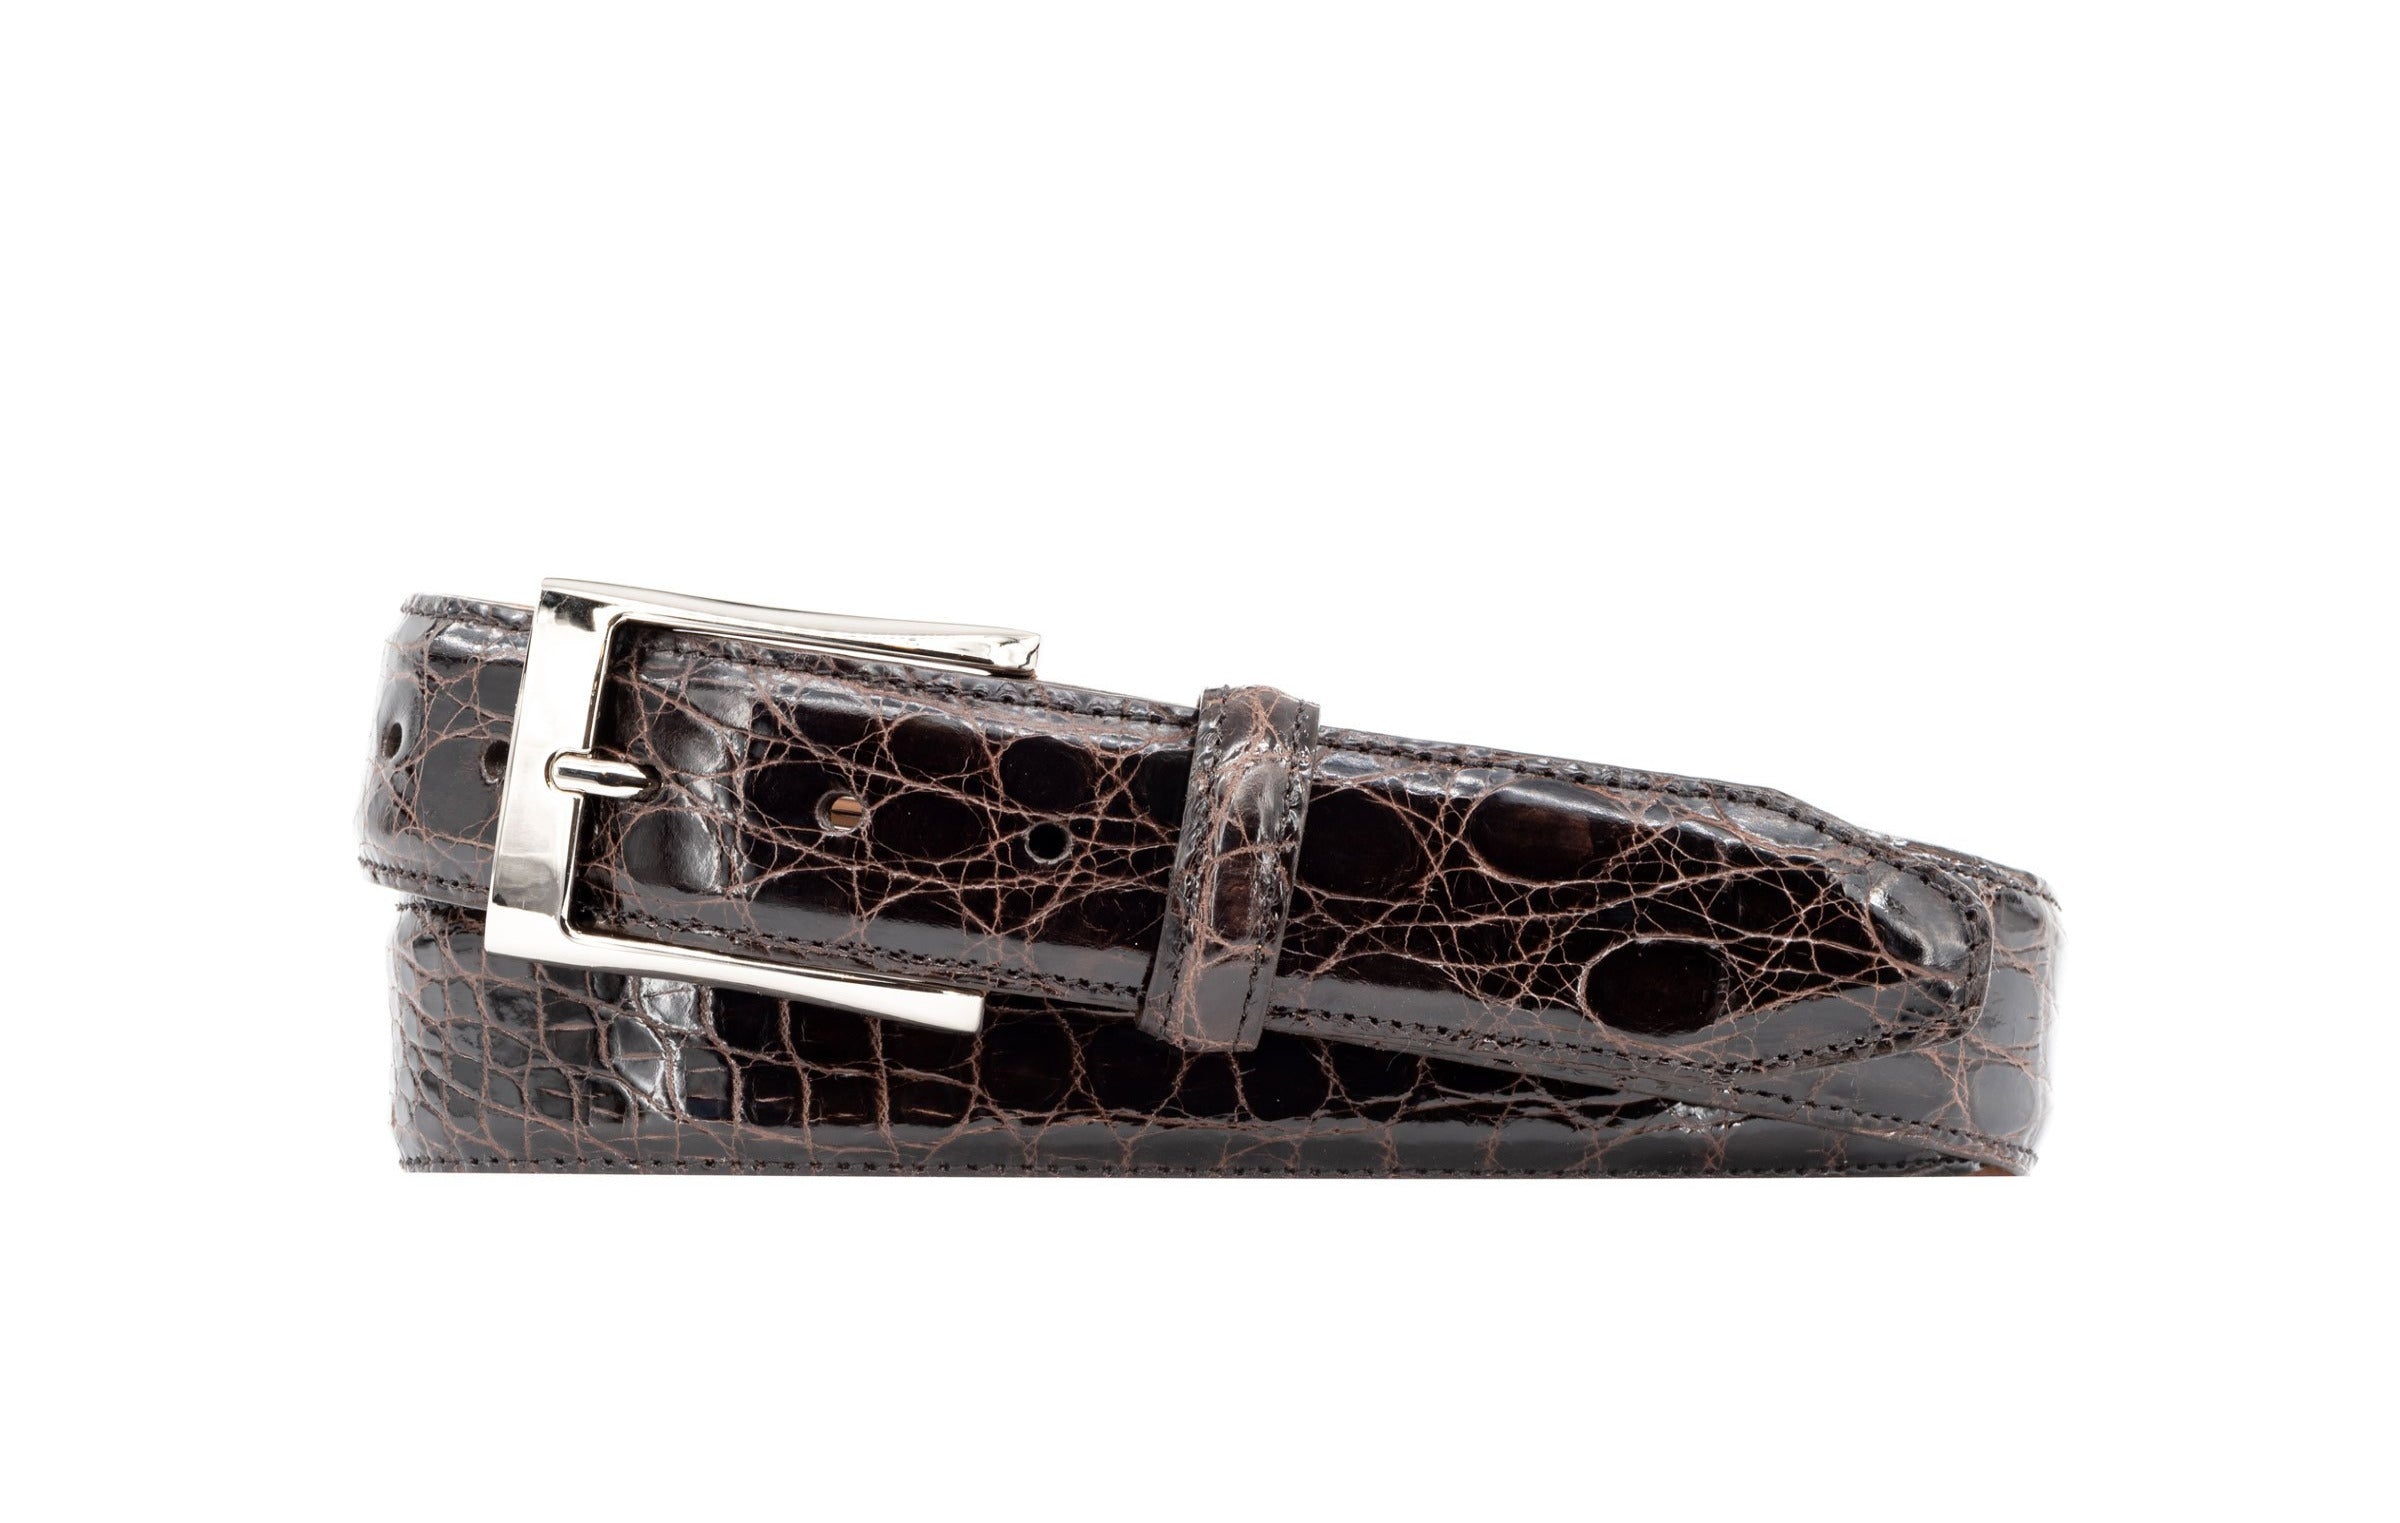 Wallace 2 Buckle Glazed Genuine Freshwater Crocodile Leather Belt - Walnut